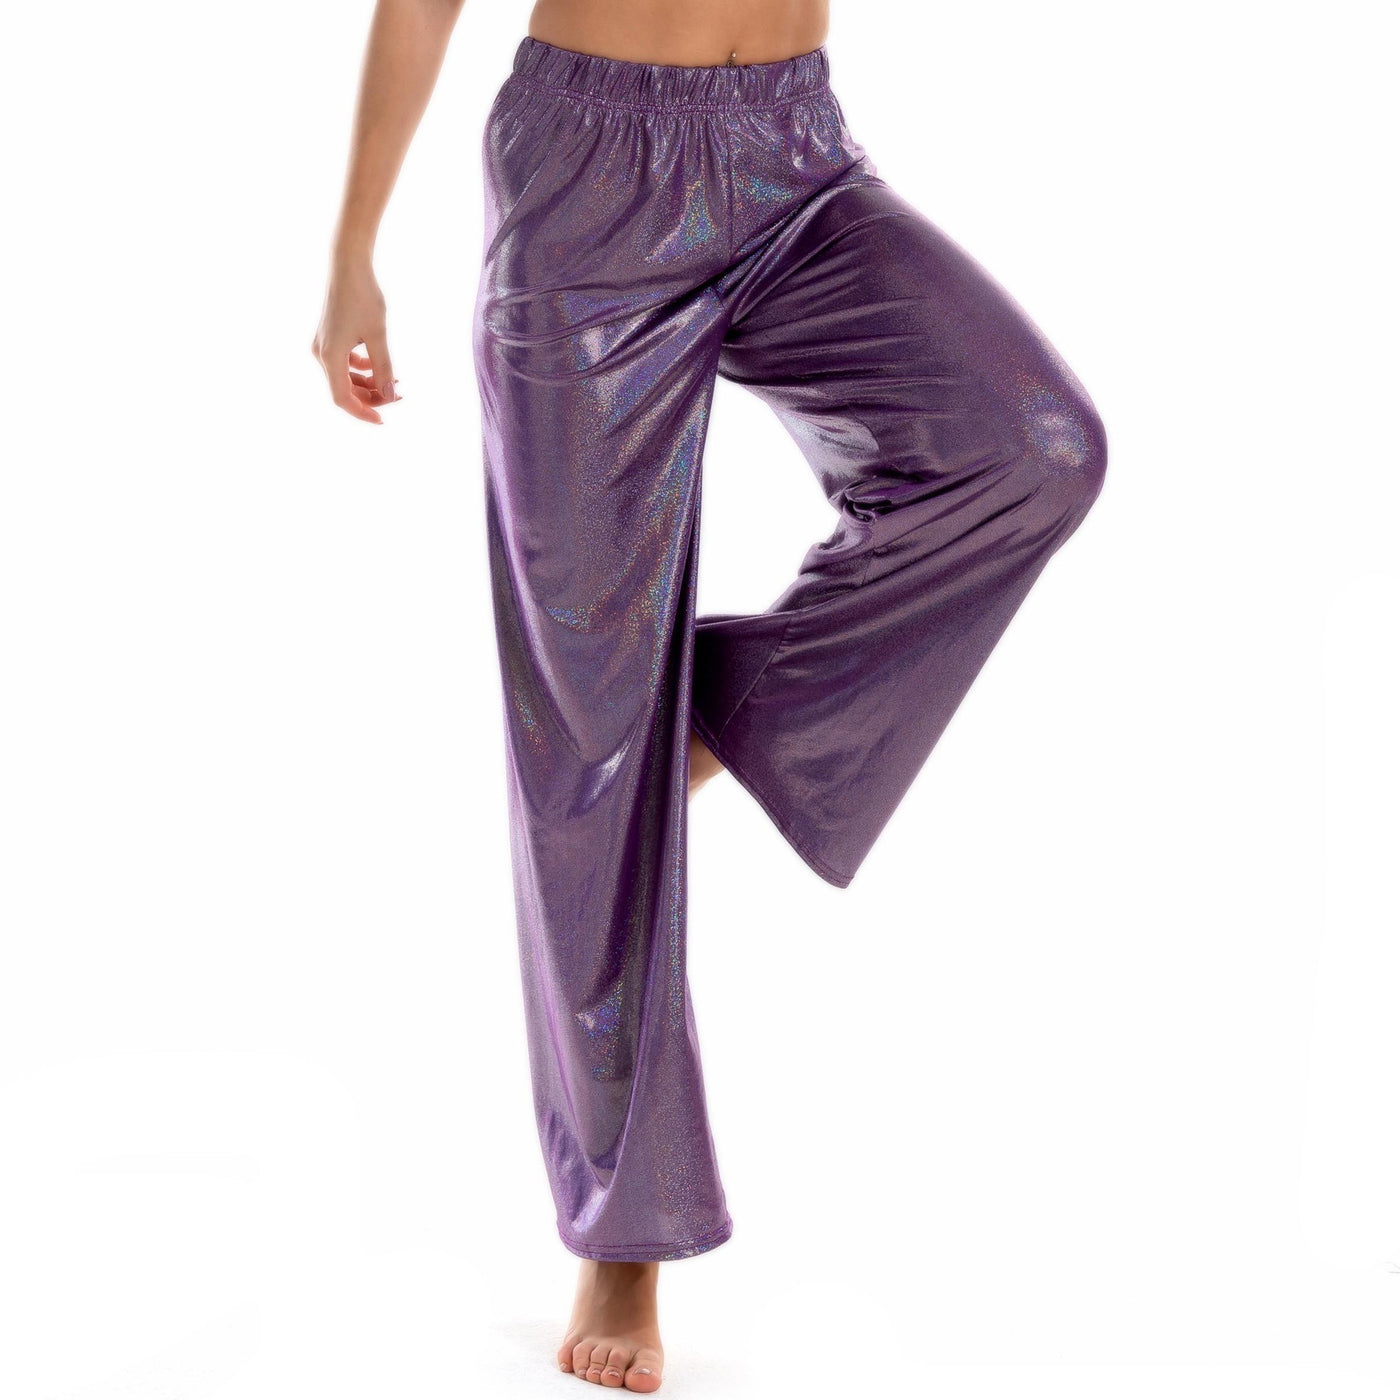 Plus Size Wide-Leg Pants for Women Loose Yoga Exercise Clothing Elastic Waist Casual Pants Women